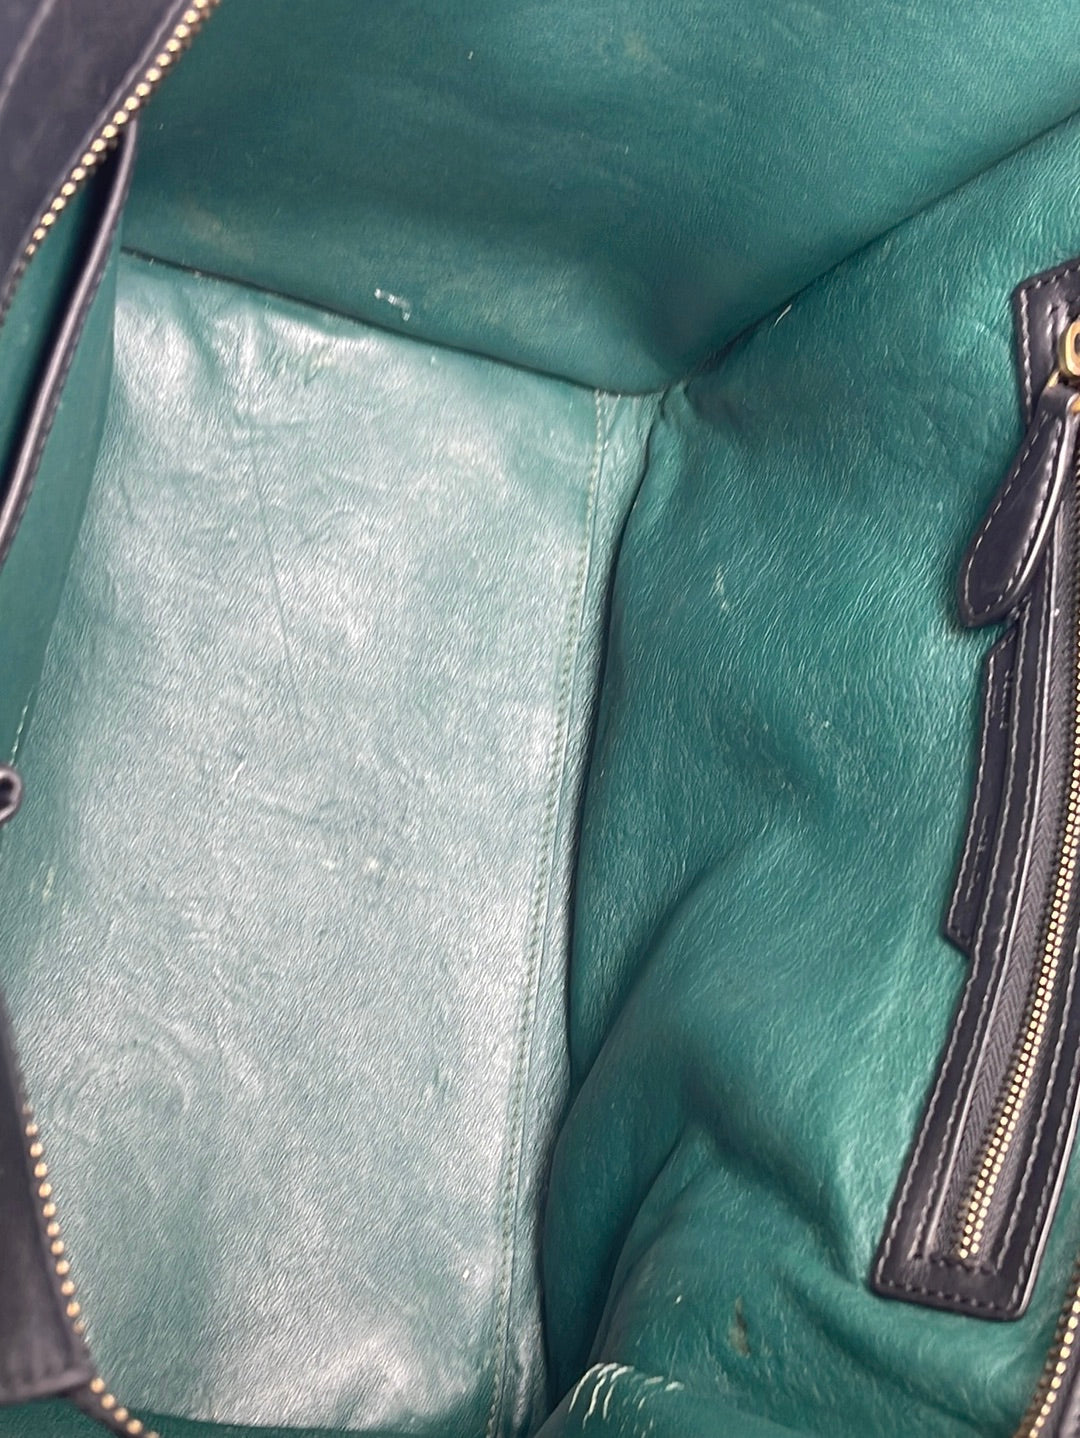 Preloved Celine Green and Black Luggage Handbag WAT0173WCU0183 031323m - $300 OFF DEAL ***